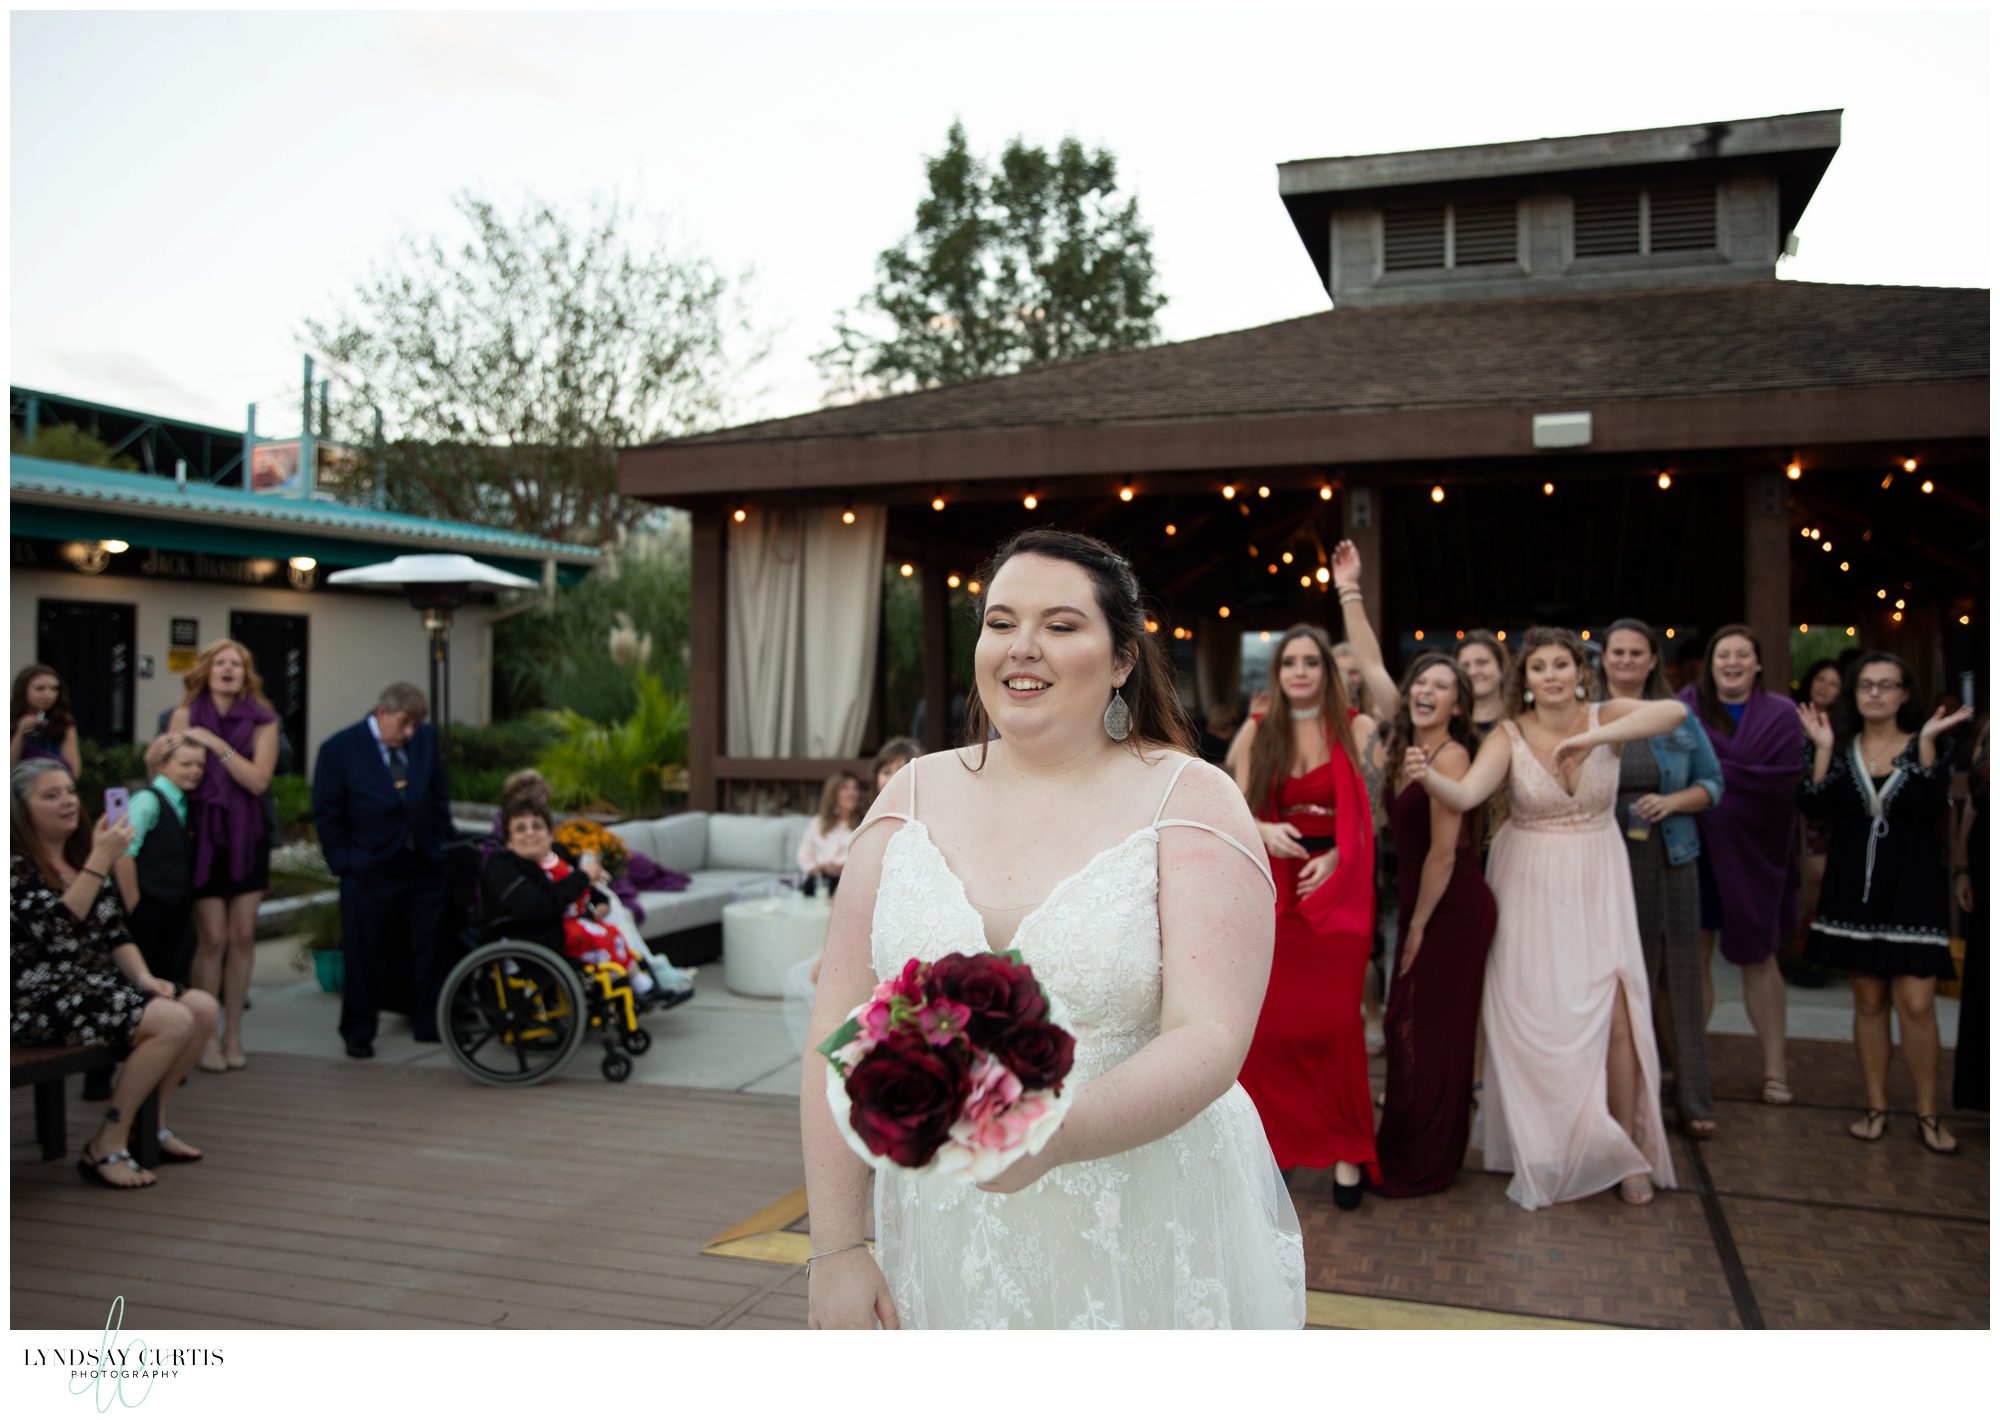 Virginia Beach wedding photographer Lyndsay Curtis Photography - Bride bouquet toss at wedding reception